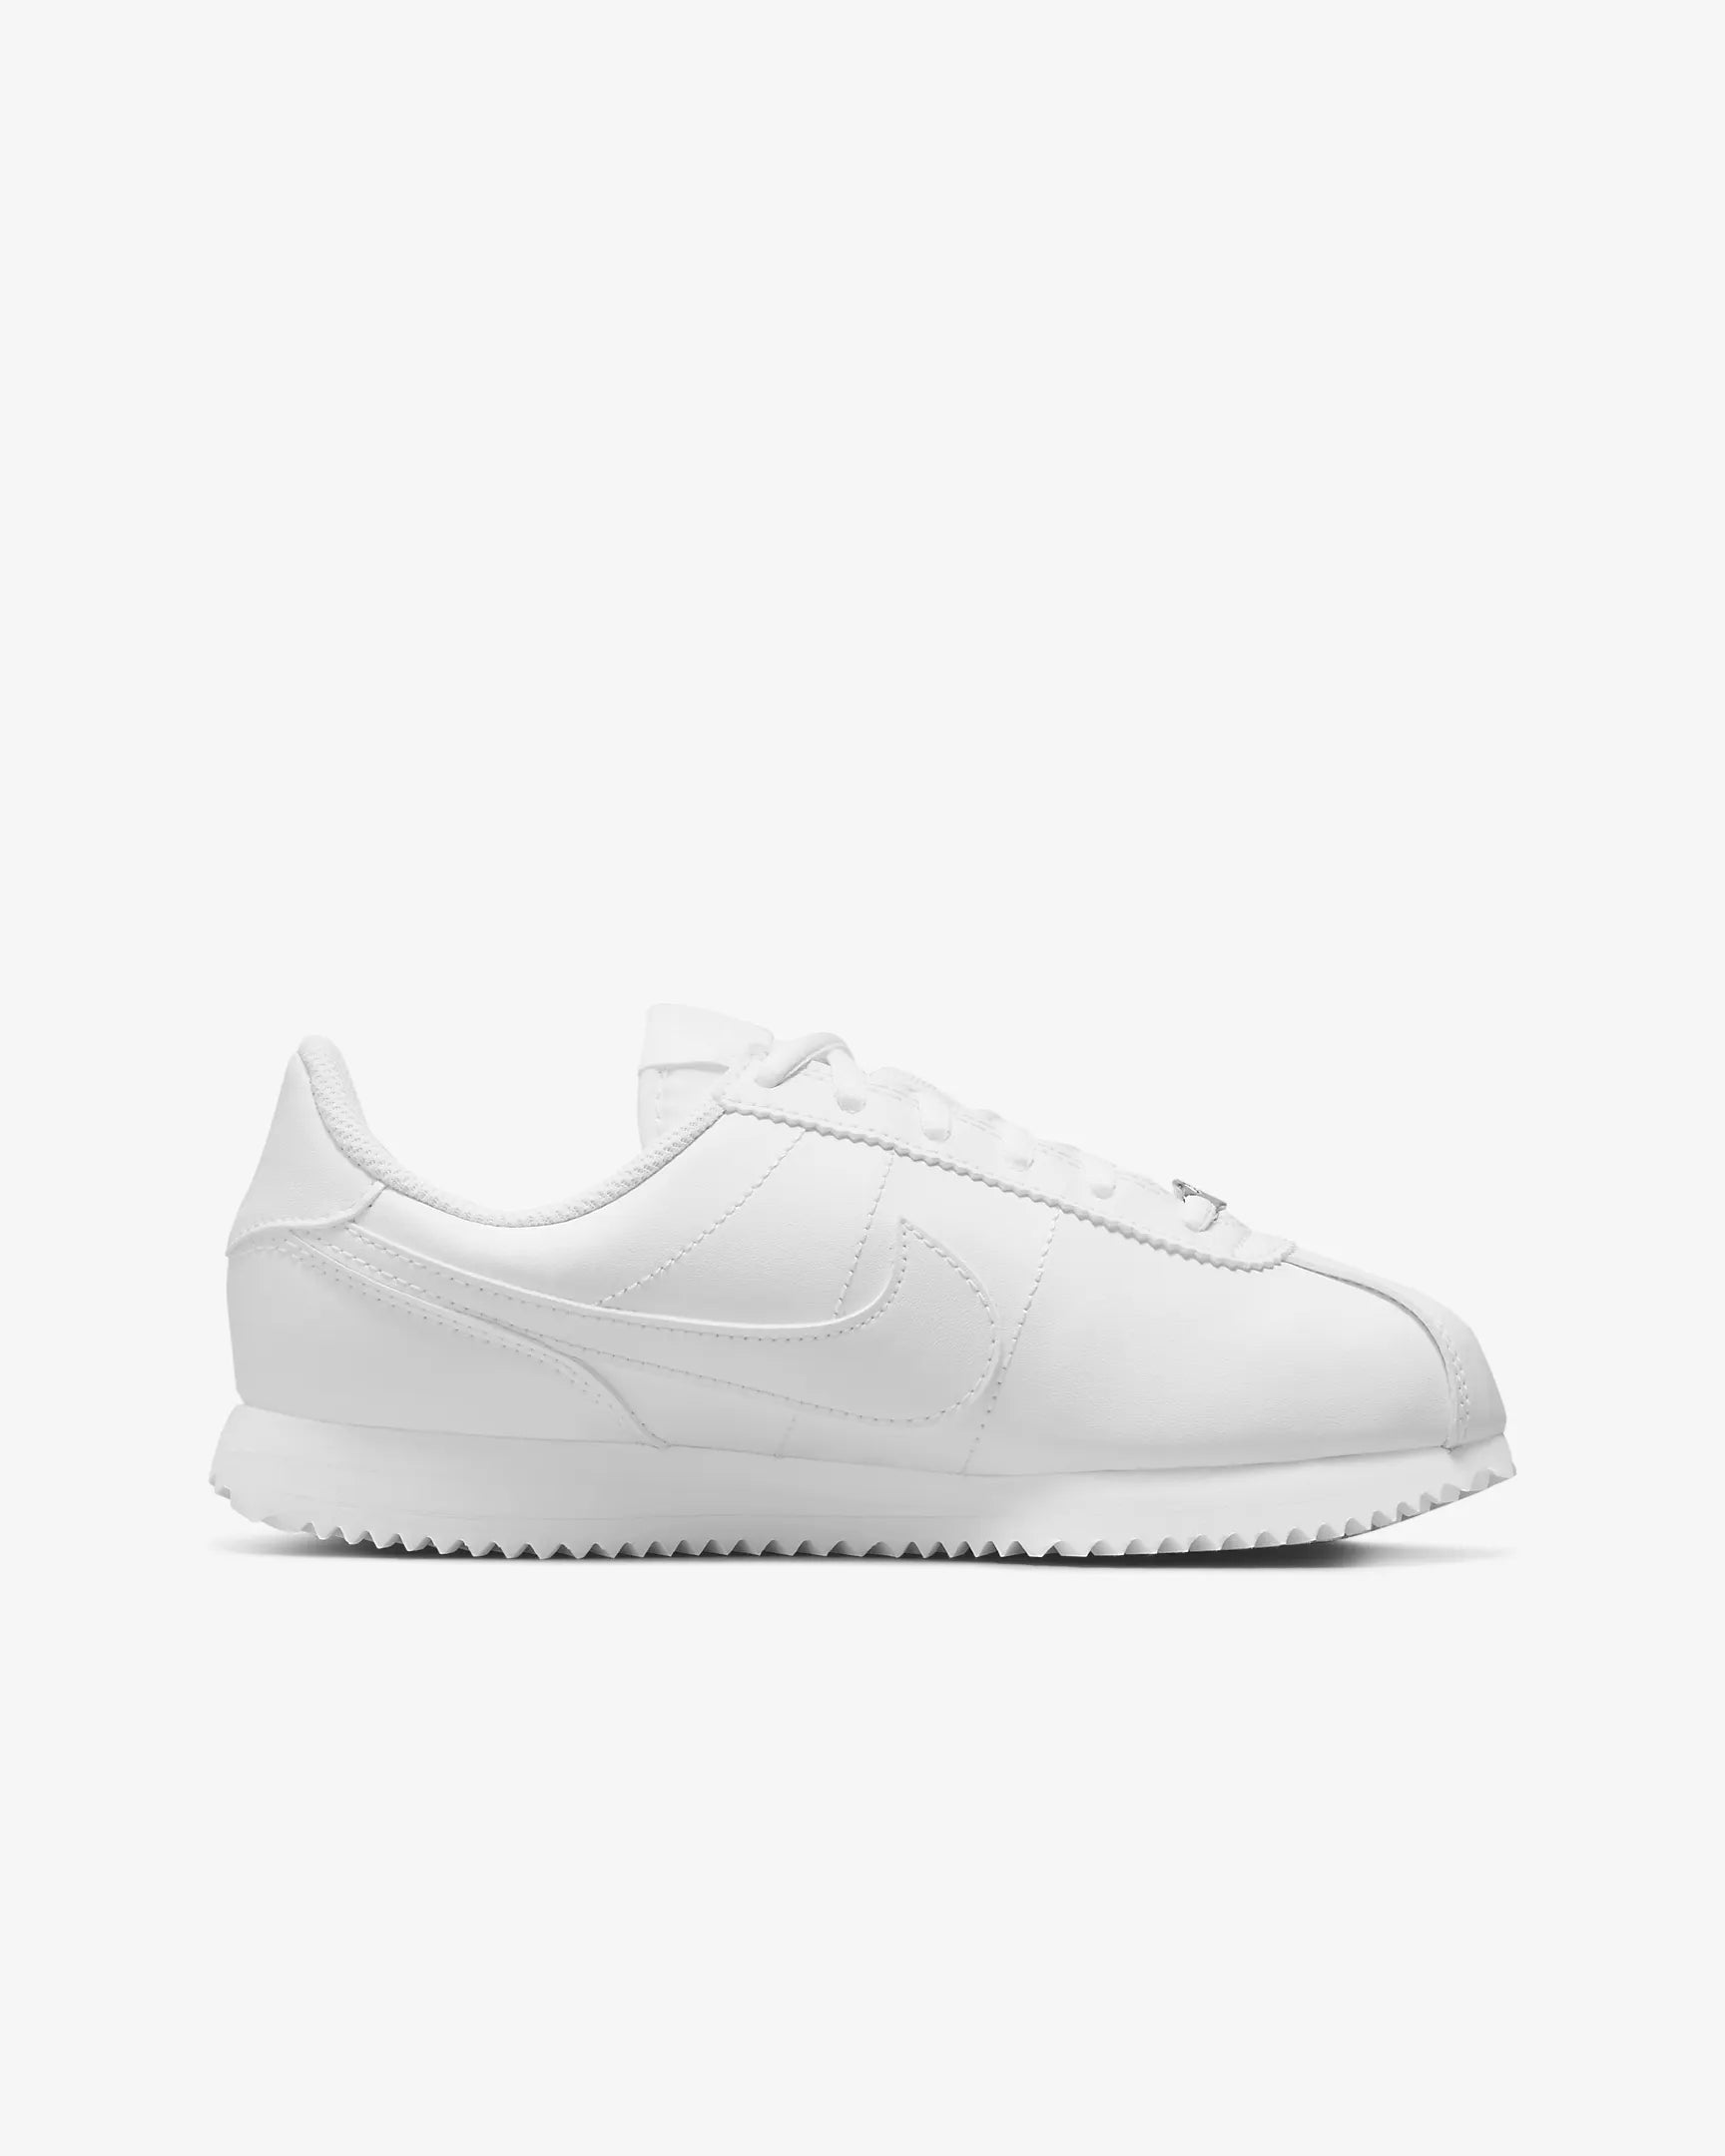 Nike Cortez Leather White